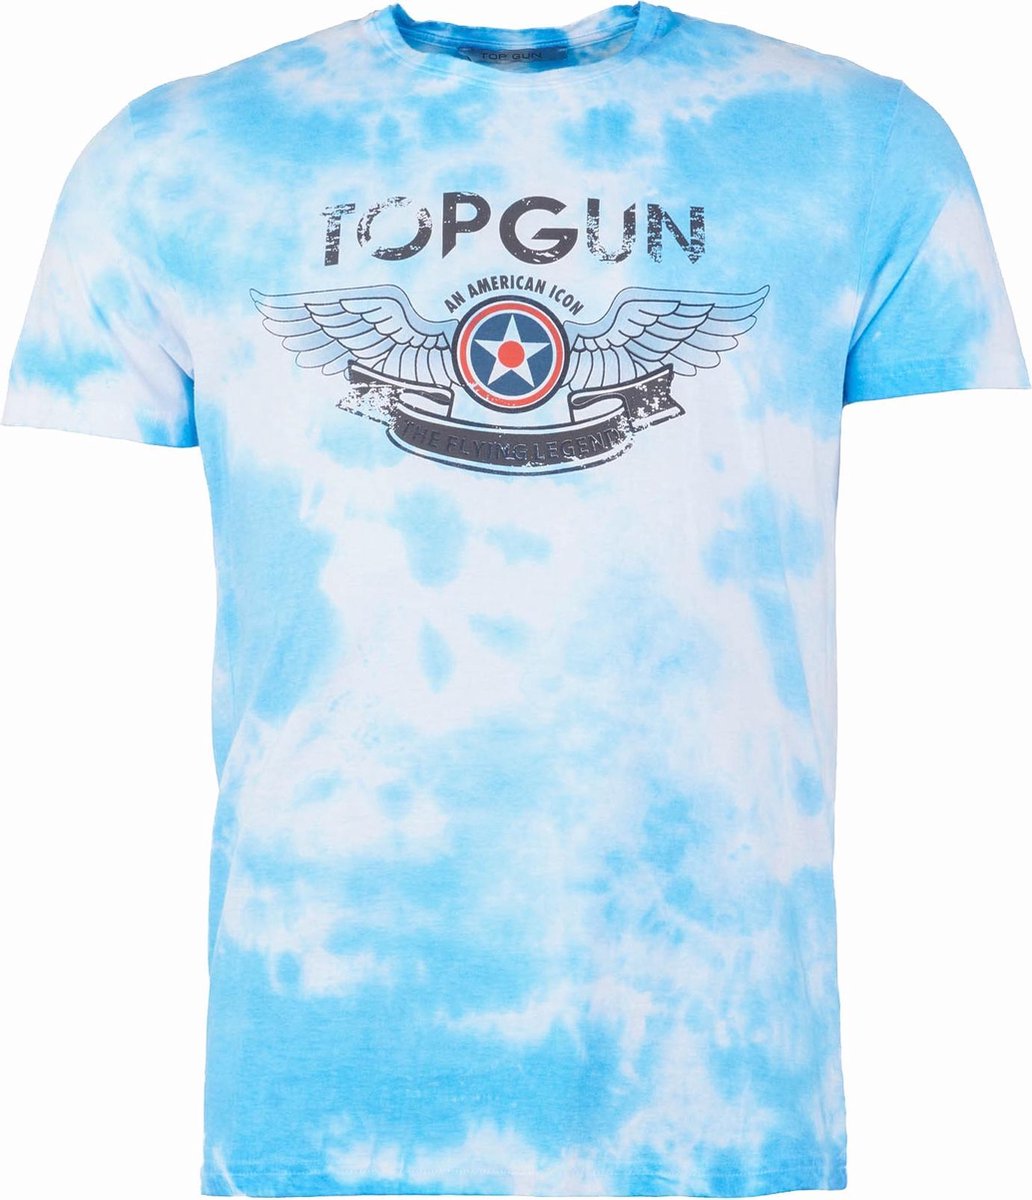 Top Gun ® T-Shirt American Icon camouflage (3XL)